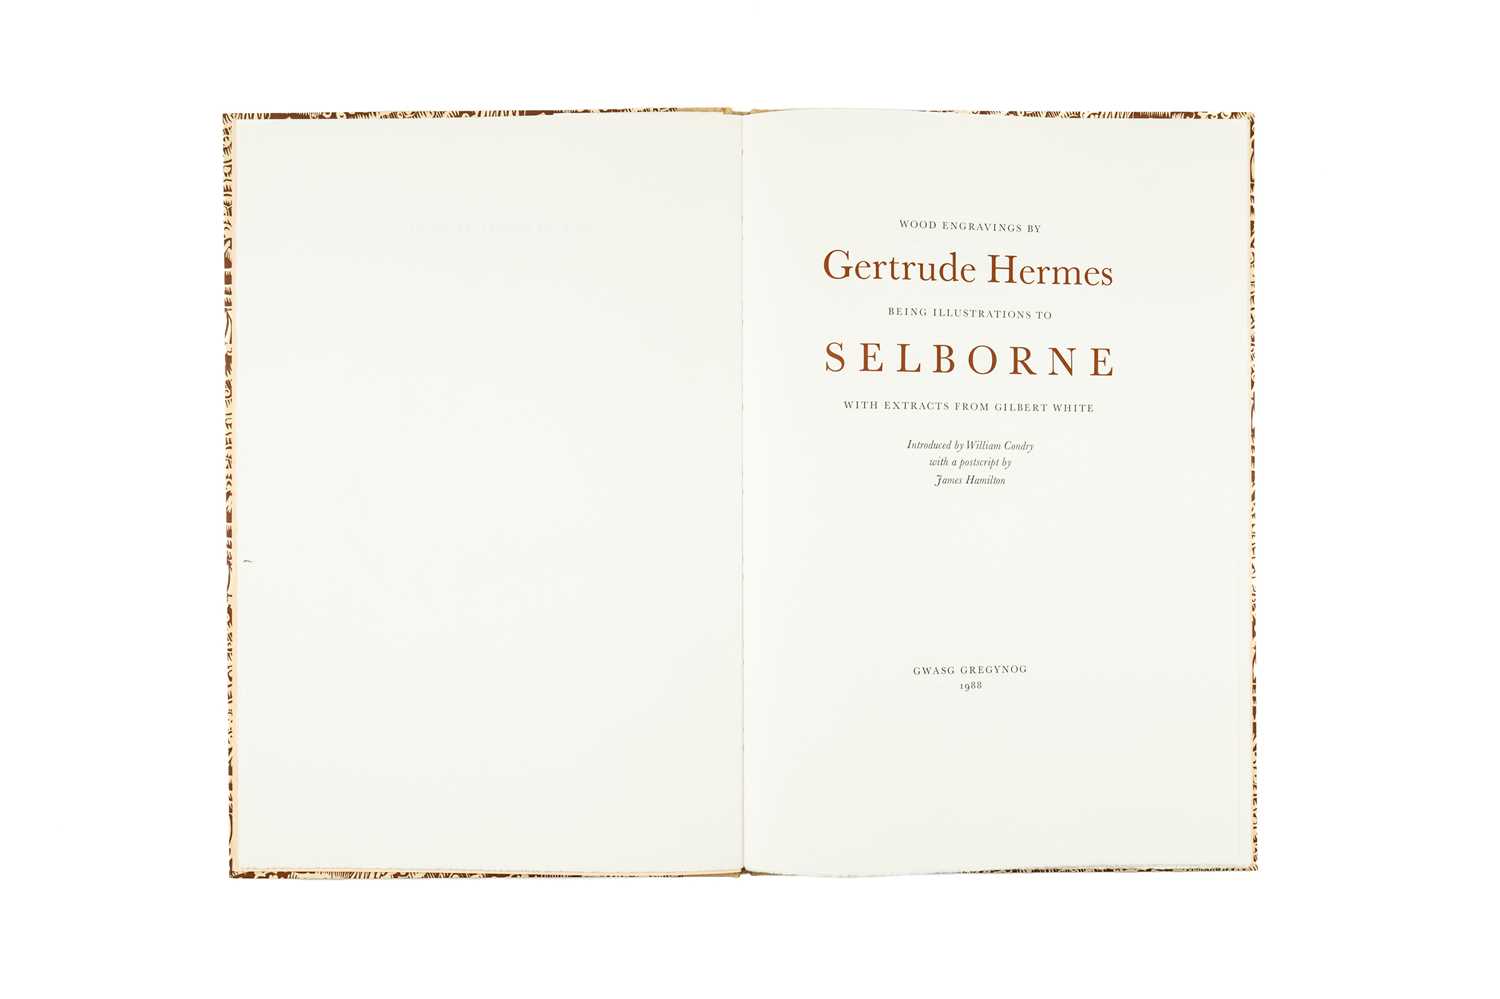 GWASG GREGYNOG PRESS: SELBORNE 1988 limited edition (60/200) 'Wood Engravings by Gertrude Hermes,